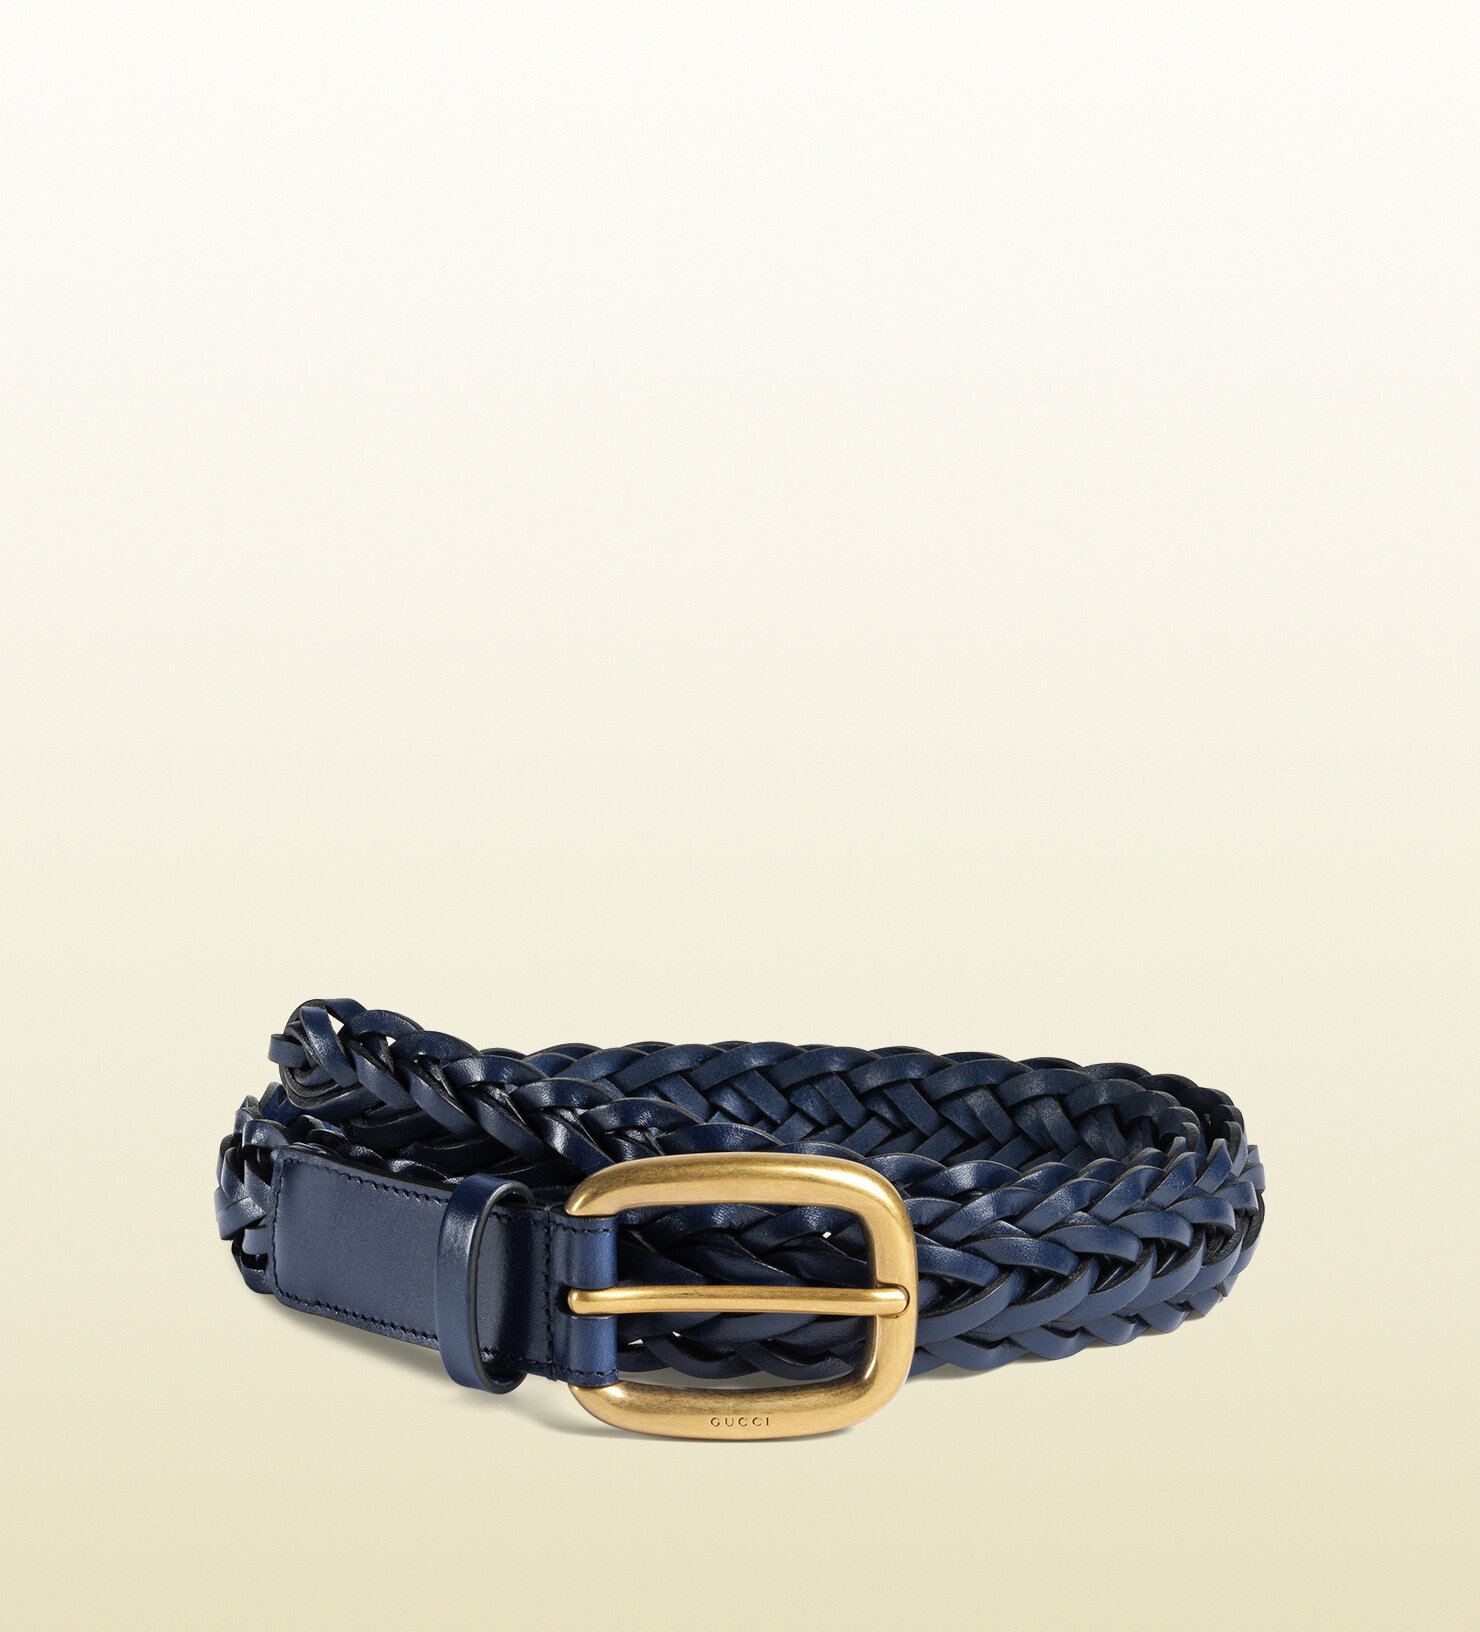 Gucci Hand-Braided Leather Belt in Blue.jpg